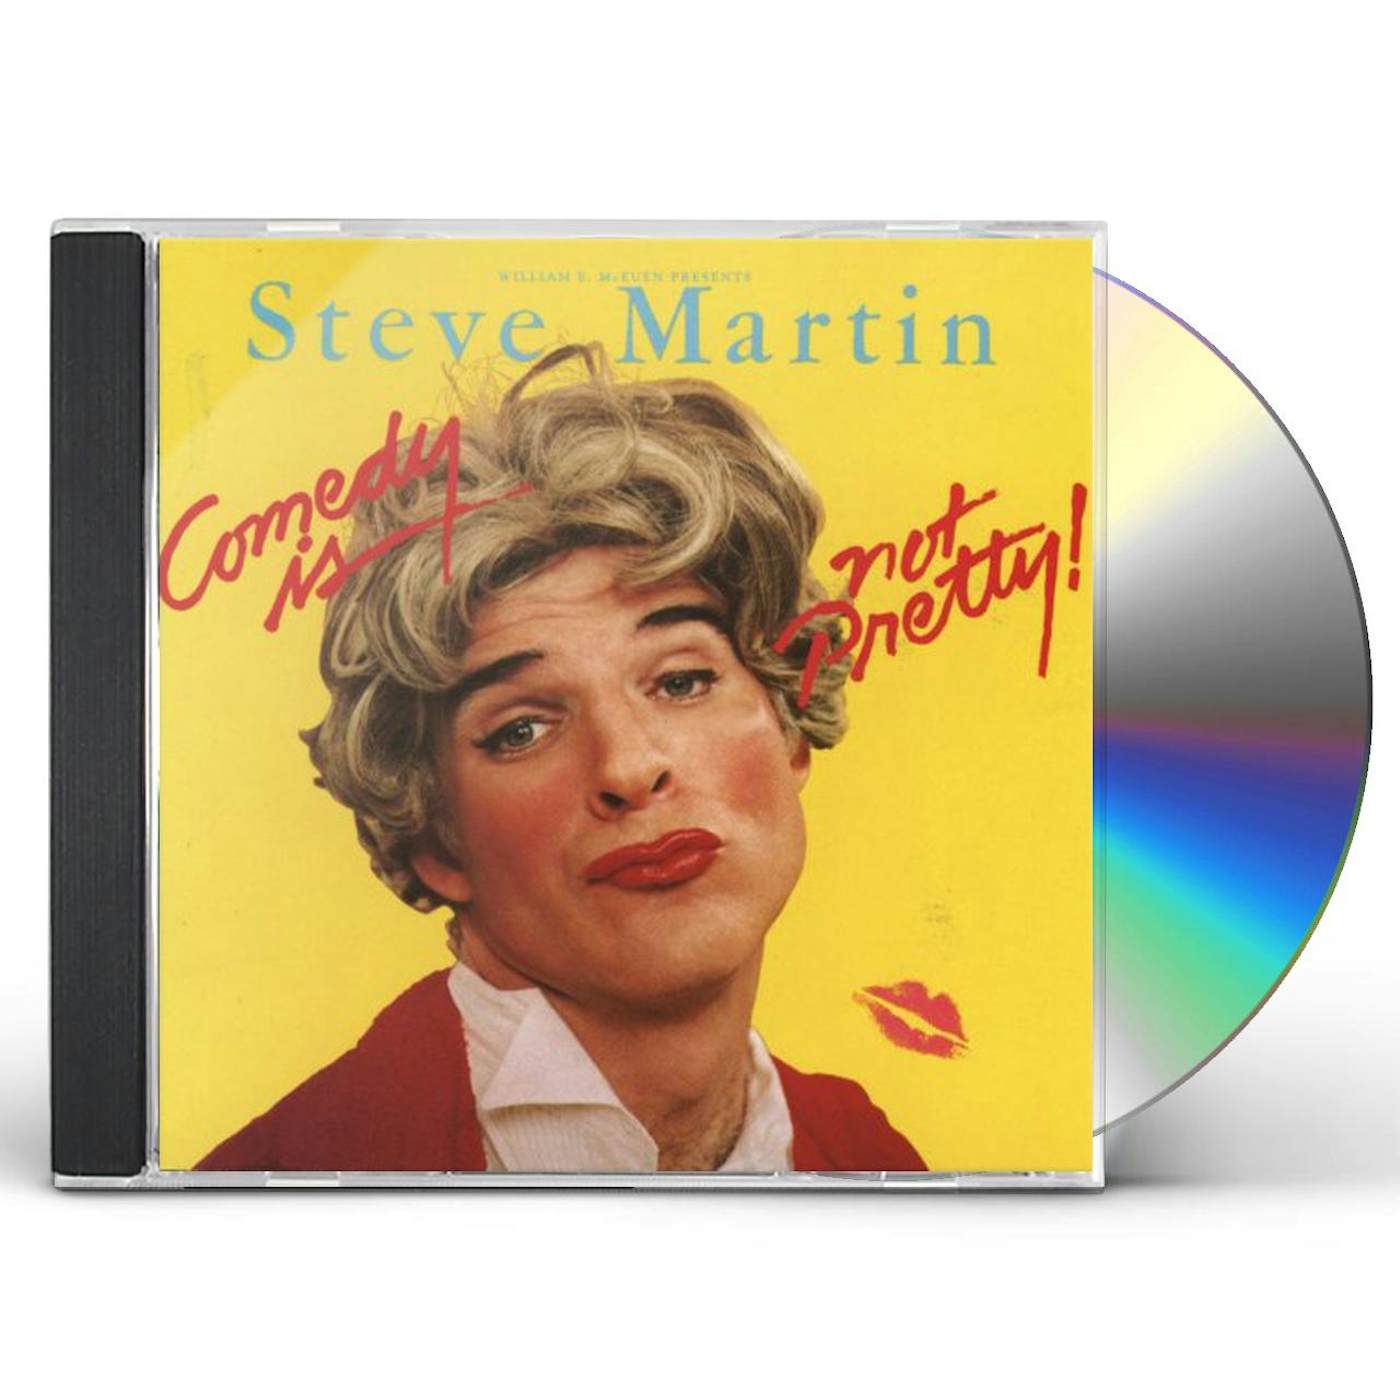 Steve Martin COMEDY IS NOT PRETTY CD